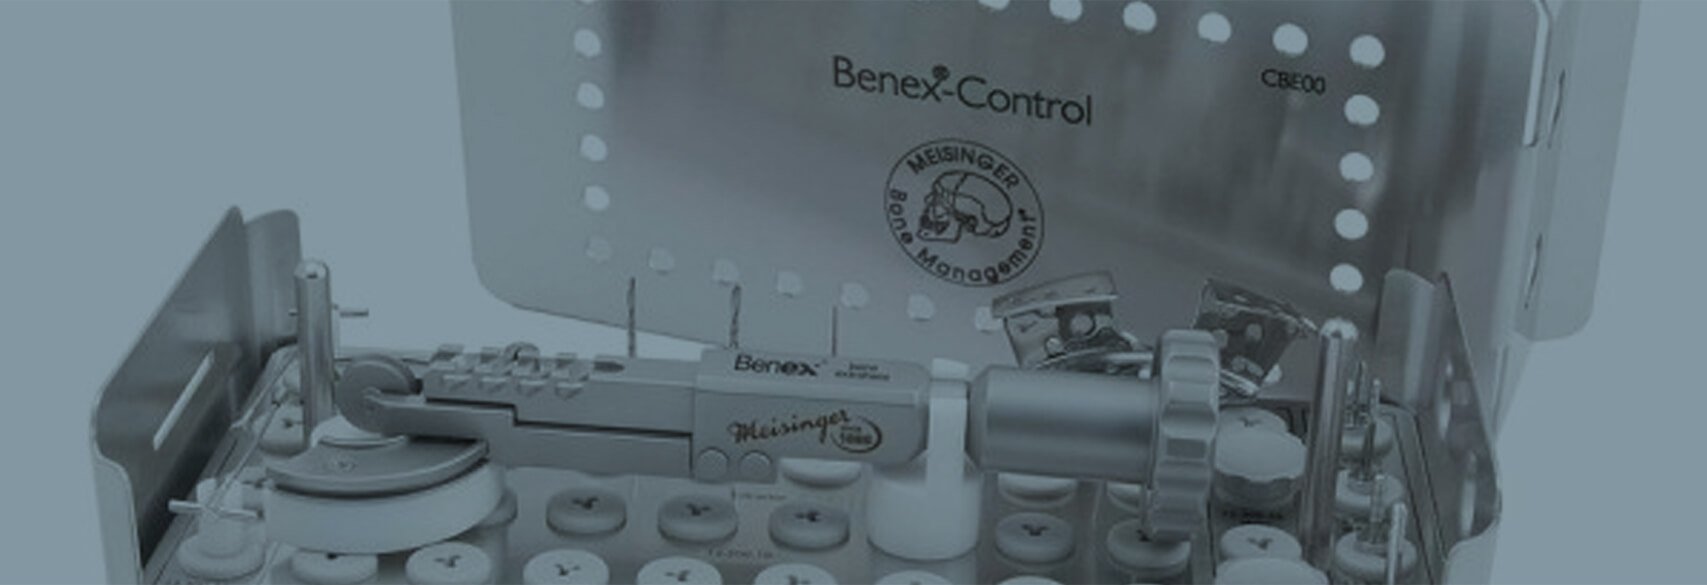 CBE00 Benex® Control Root Extraction System